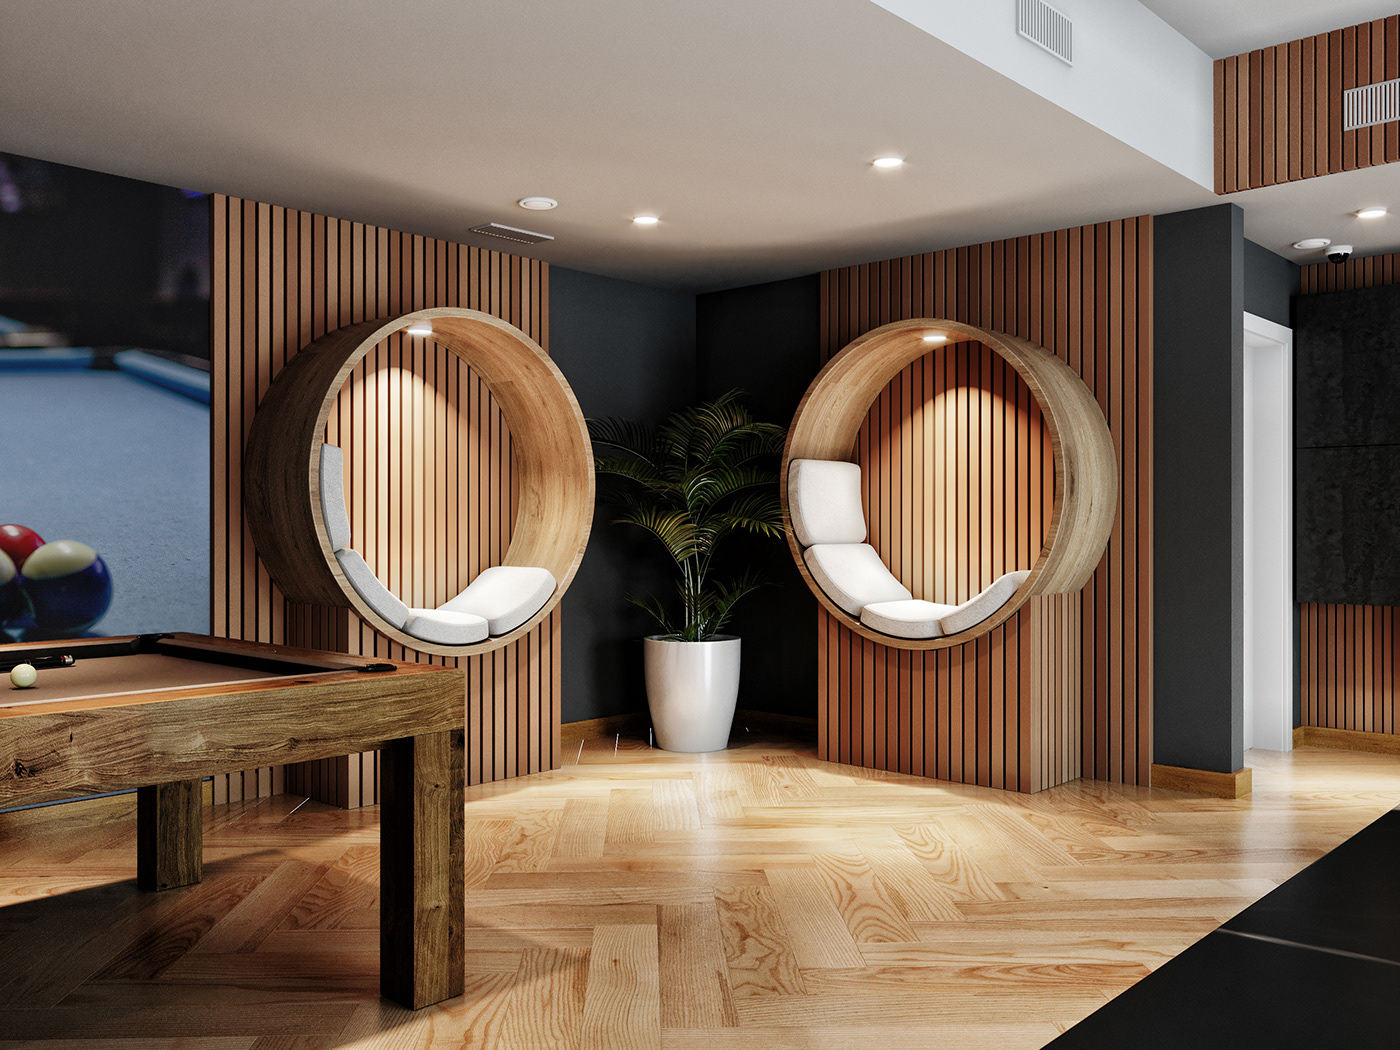 archiviz architecture visualization 3D interior design  Render 3ds max corona CGI archviz